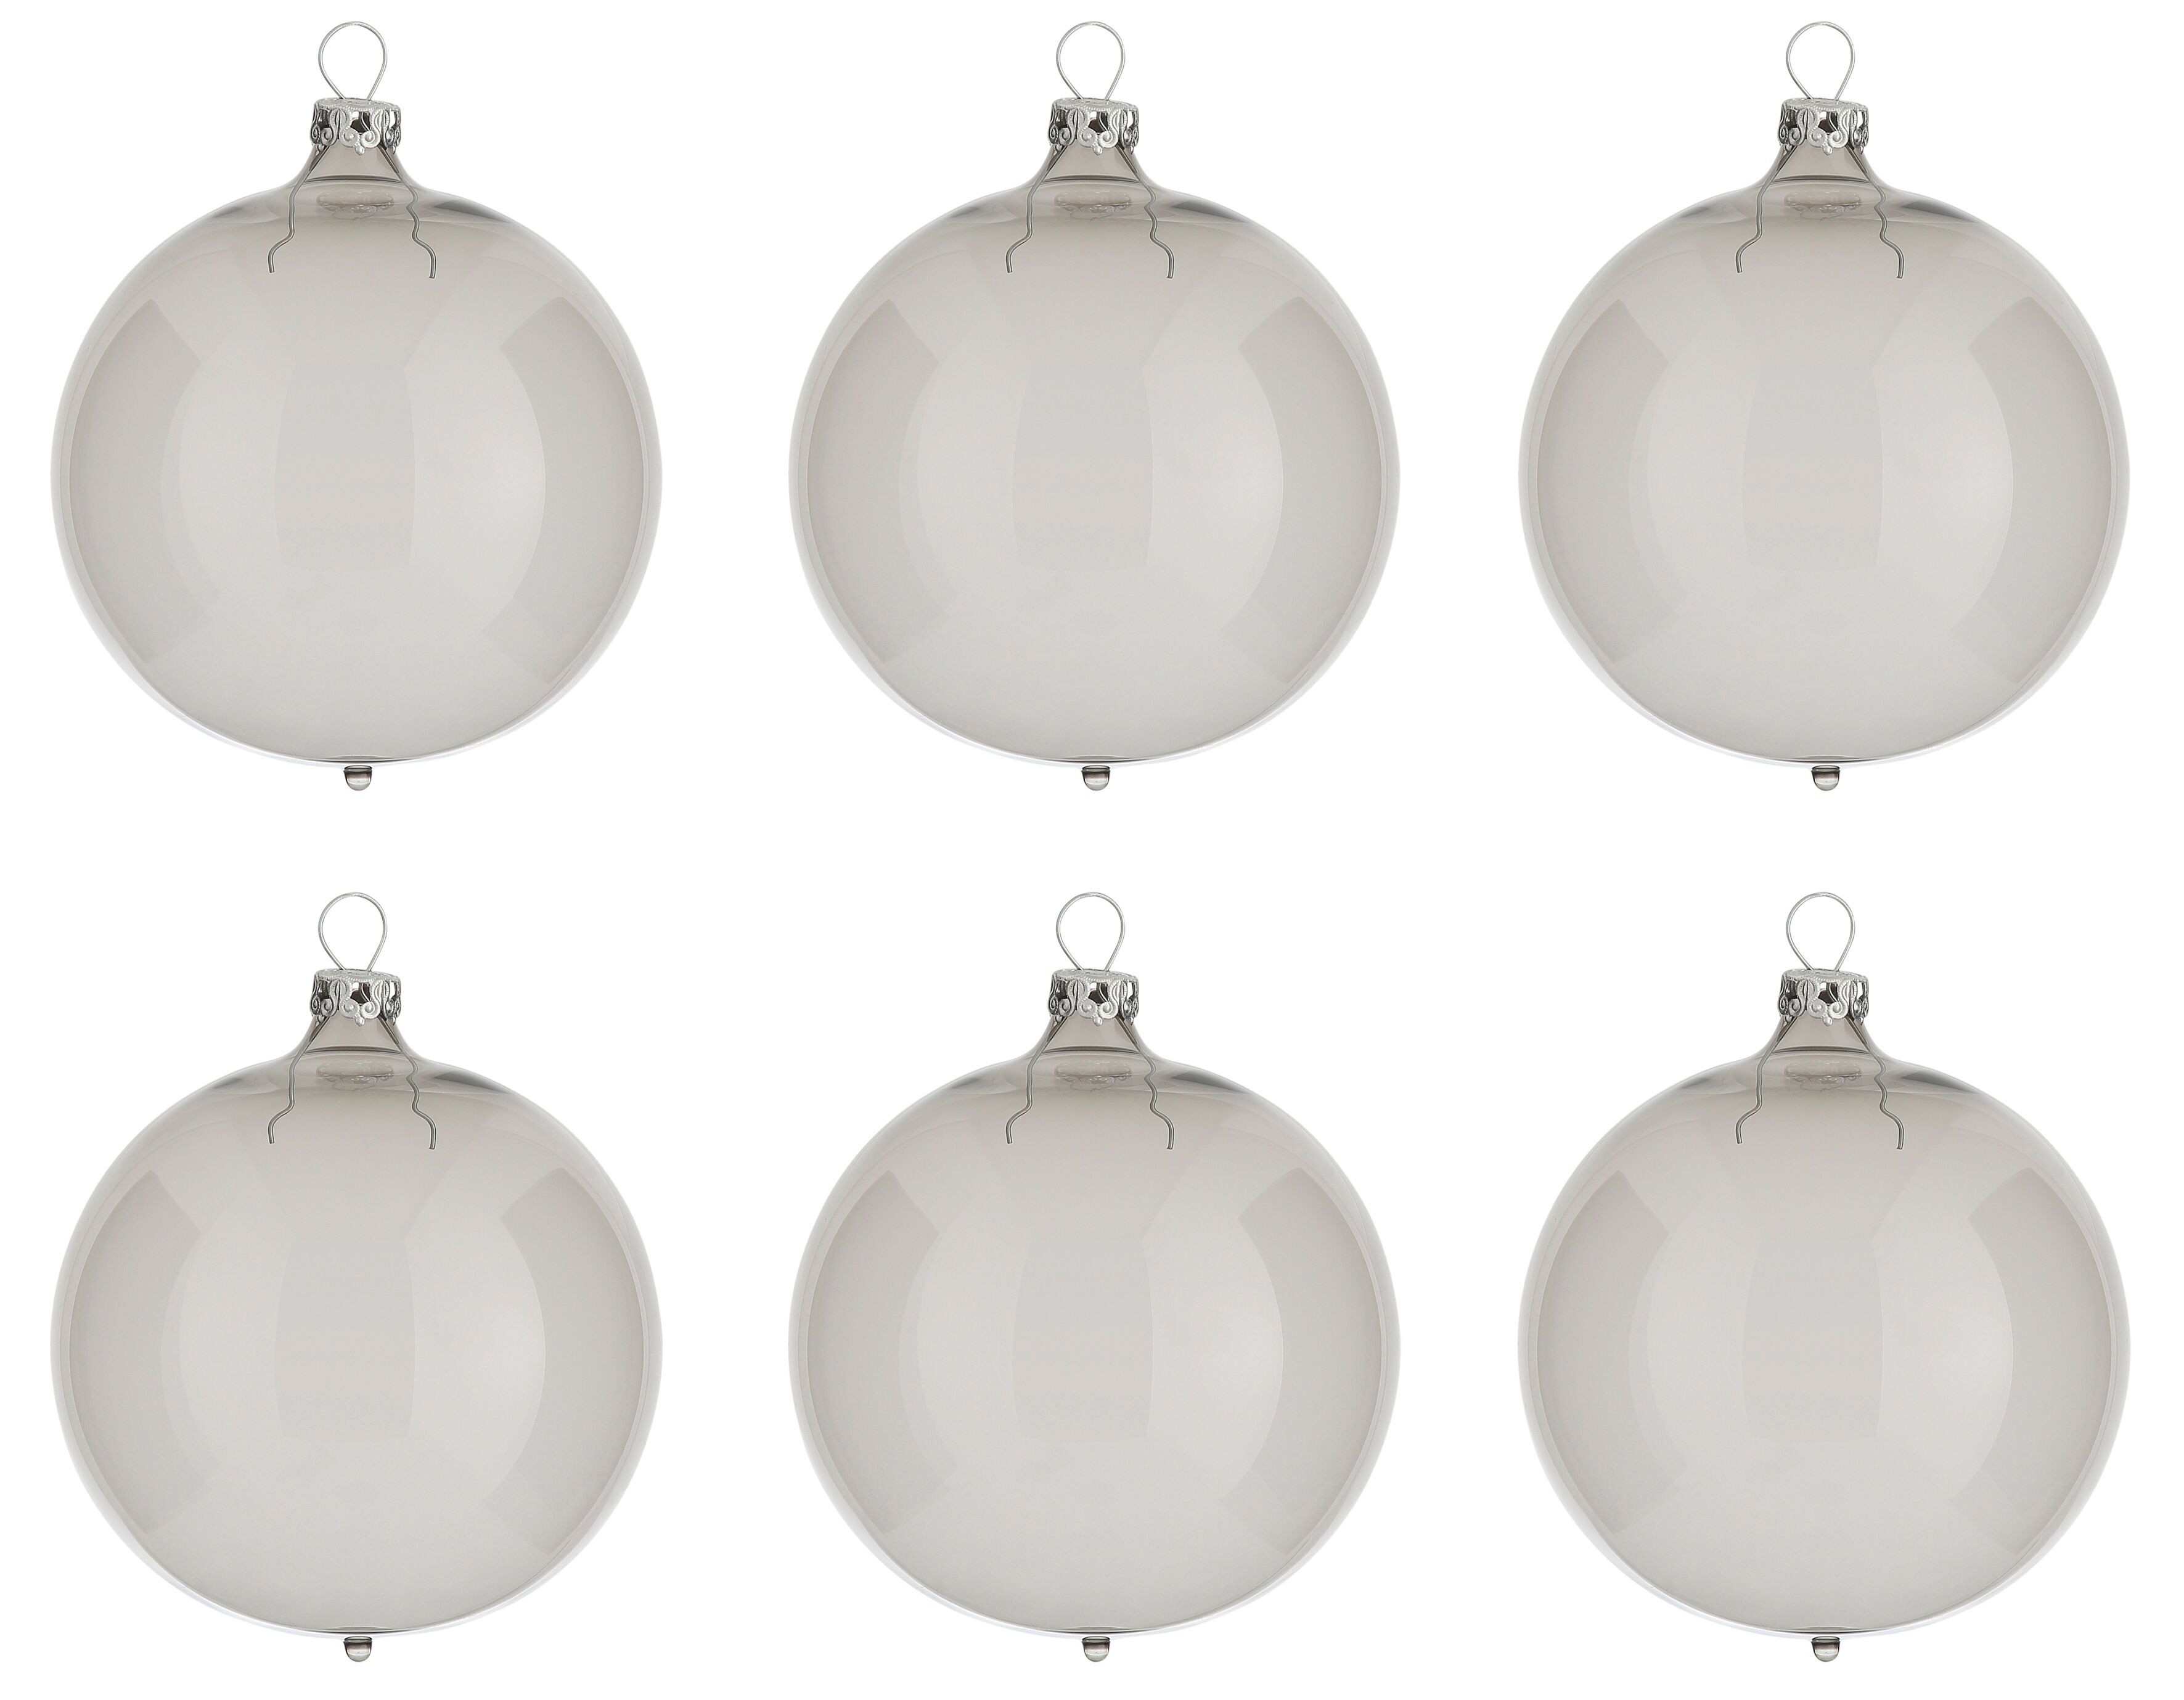 Thüringer Glasdesign Weihnachtsbaumkugel »Transparent«, (Set, 6 St.), grau grau